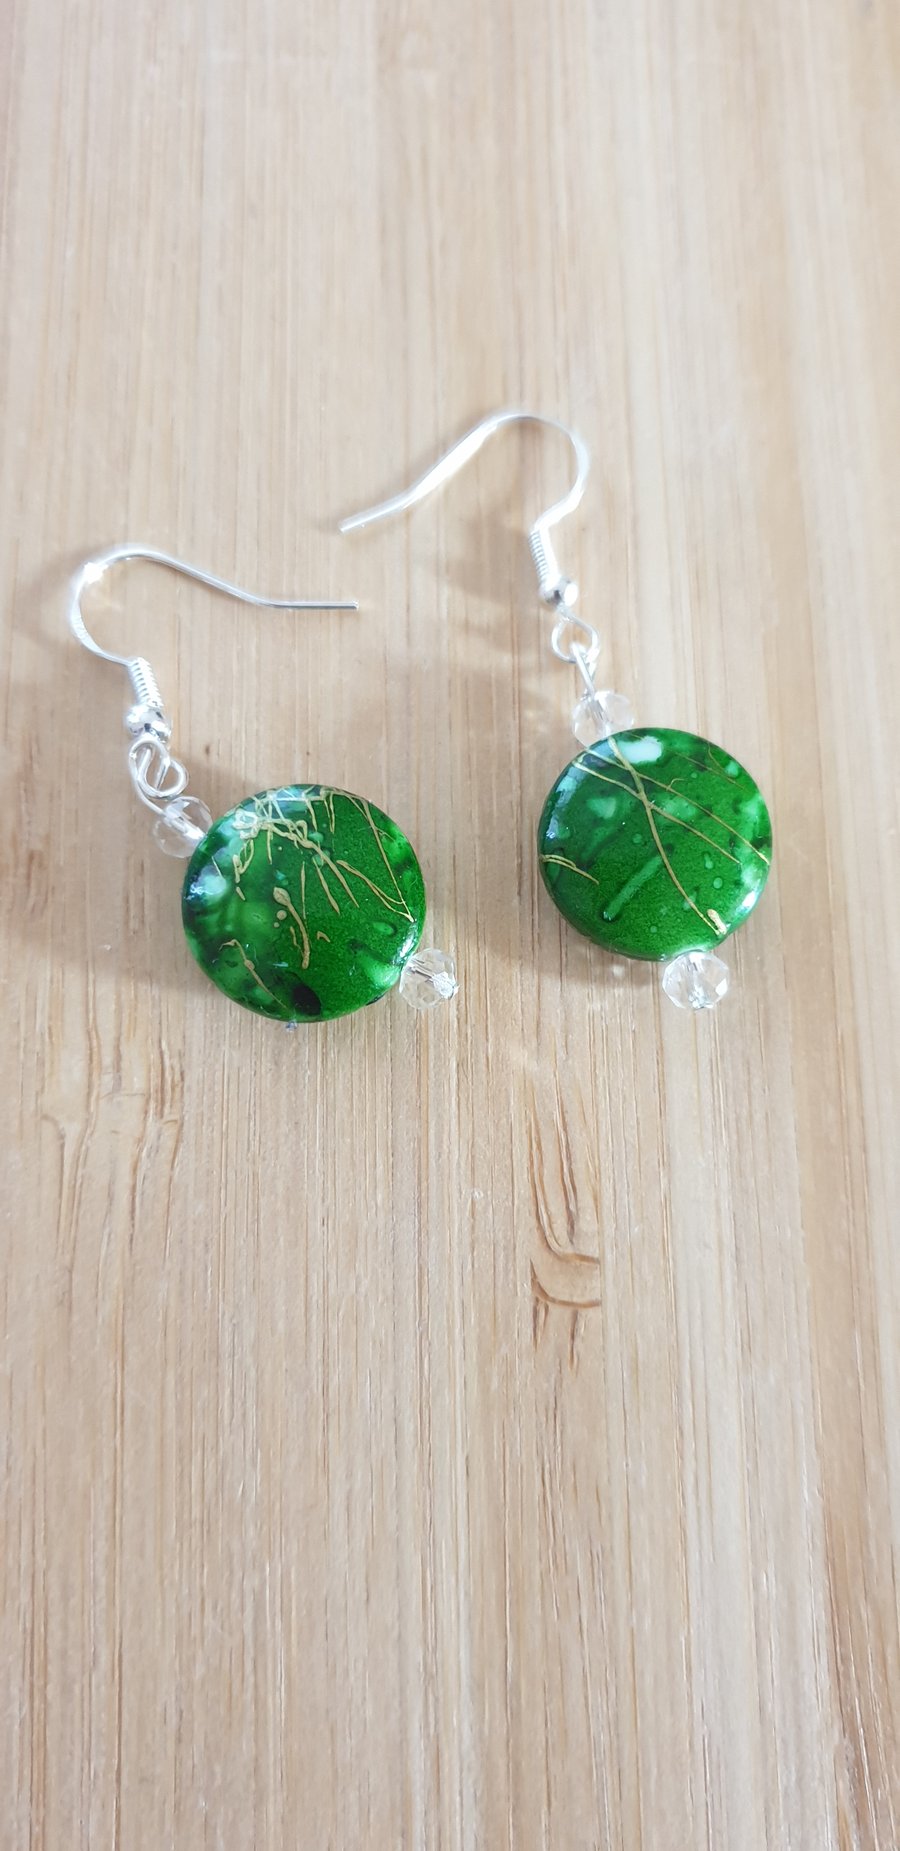 Green round earrings